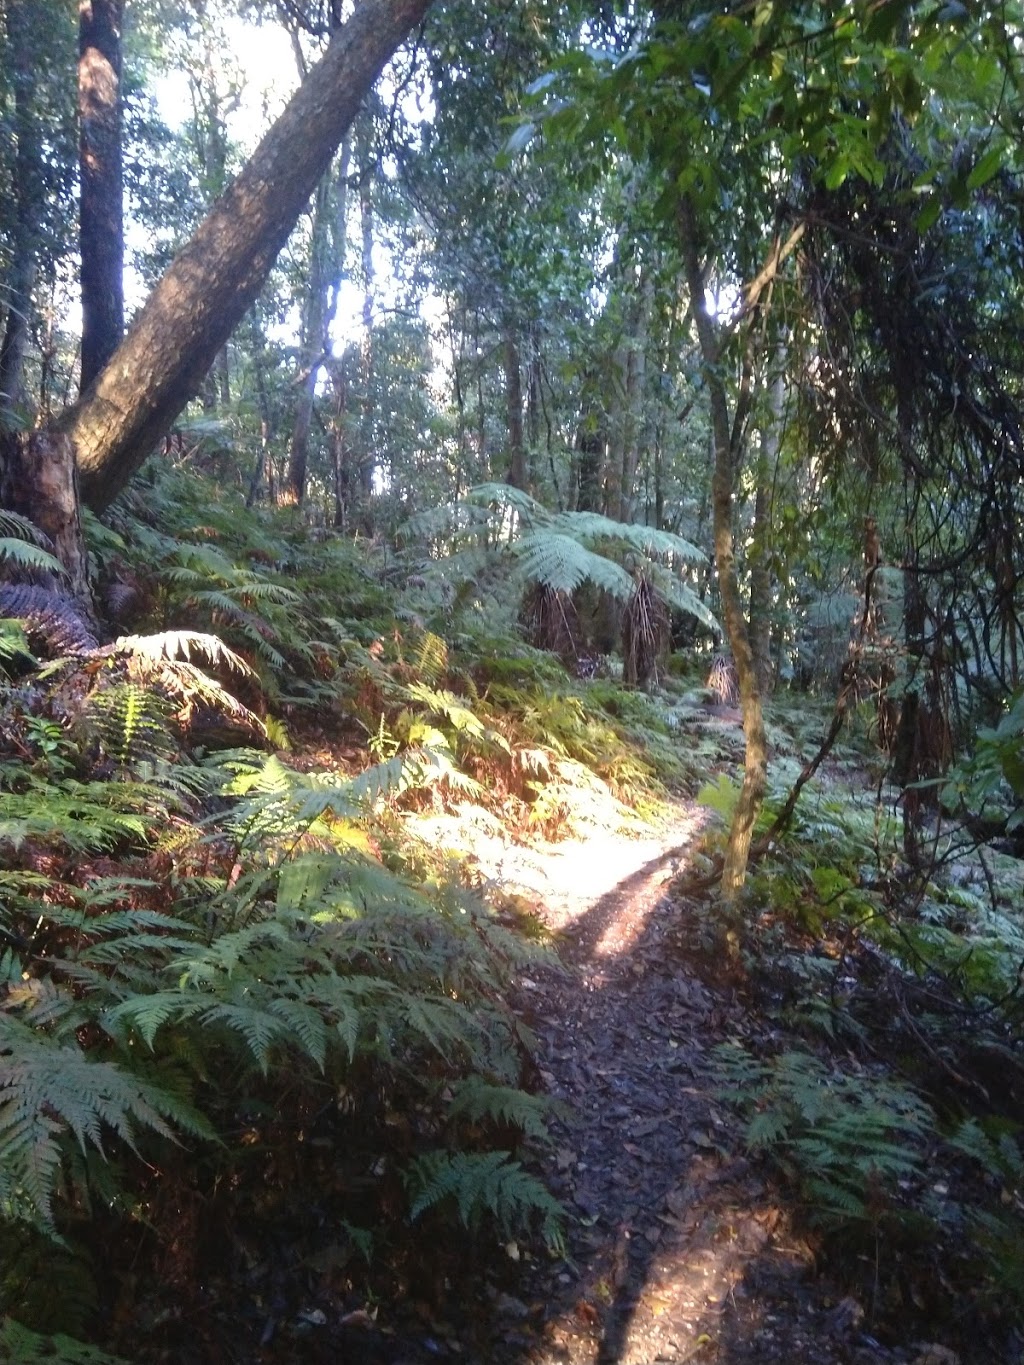 Box Cutting Rainforest Walk | park | Box Cutting Rd, Kianga NSW 2546, Australia